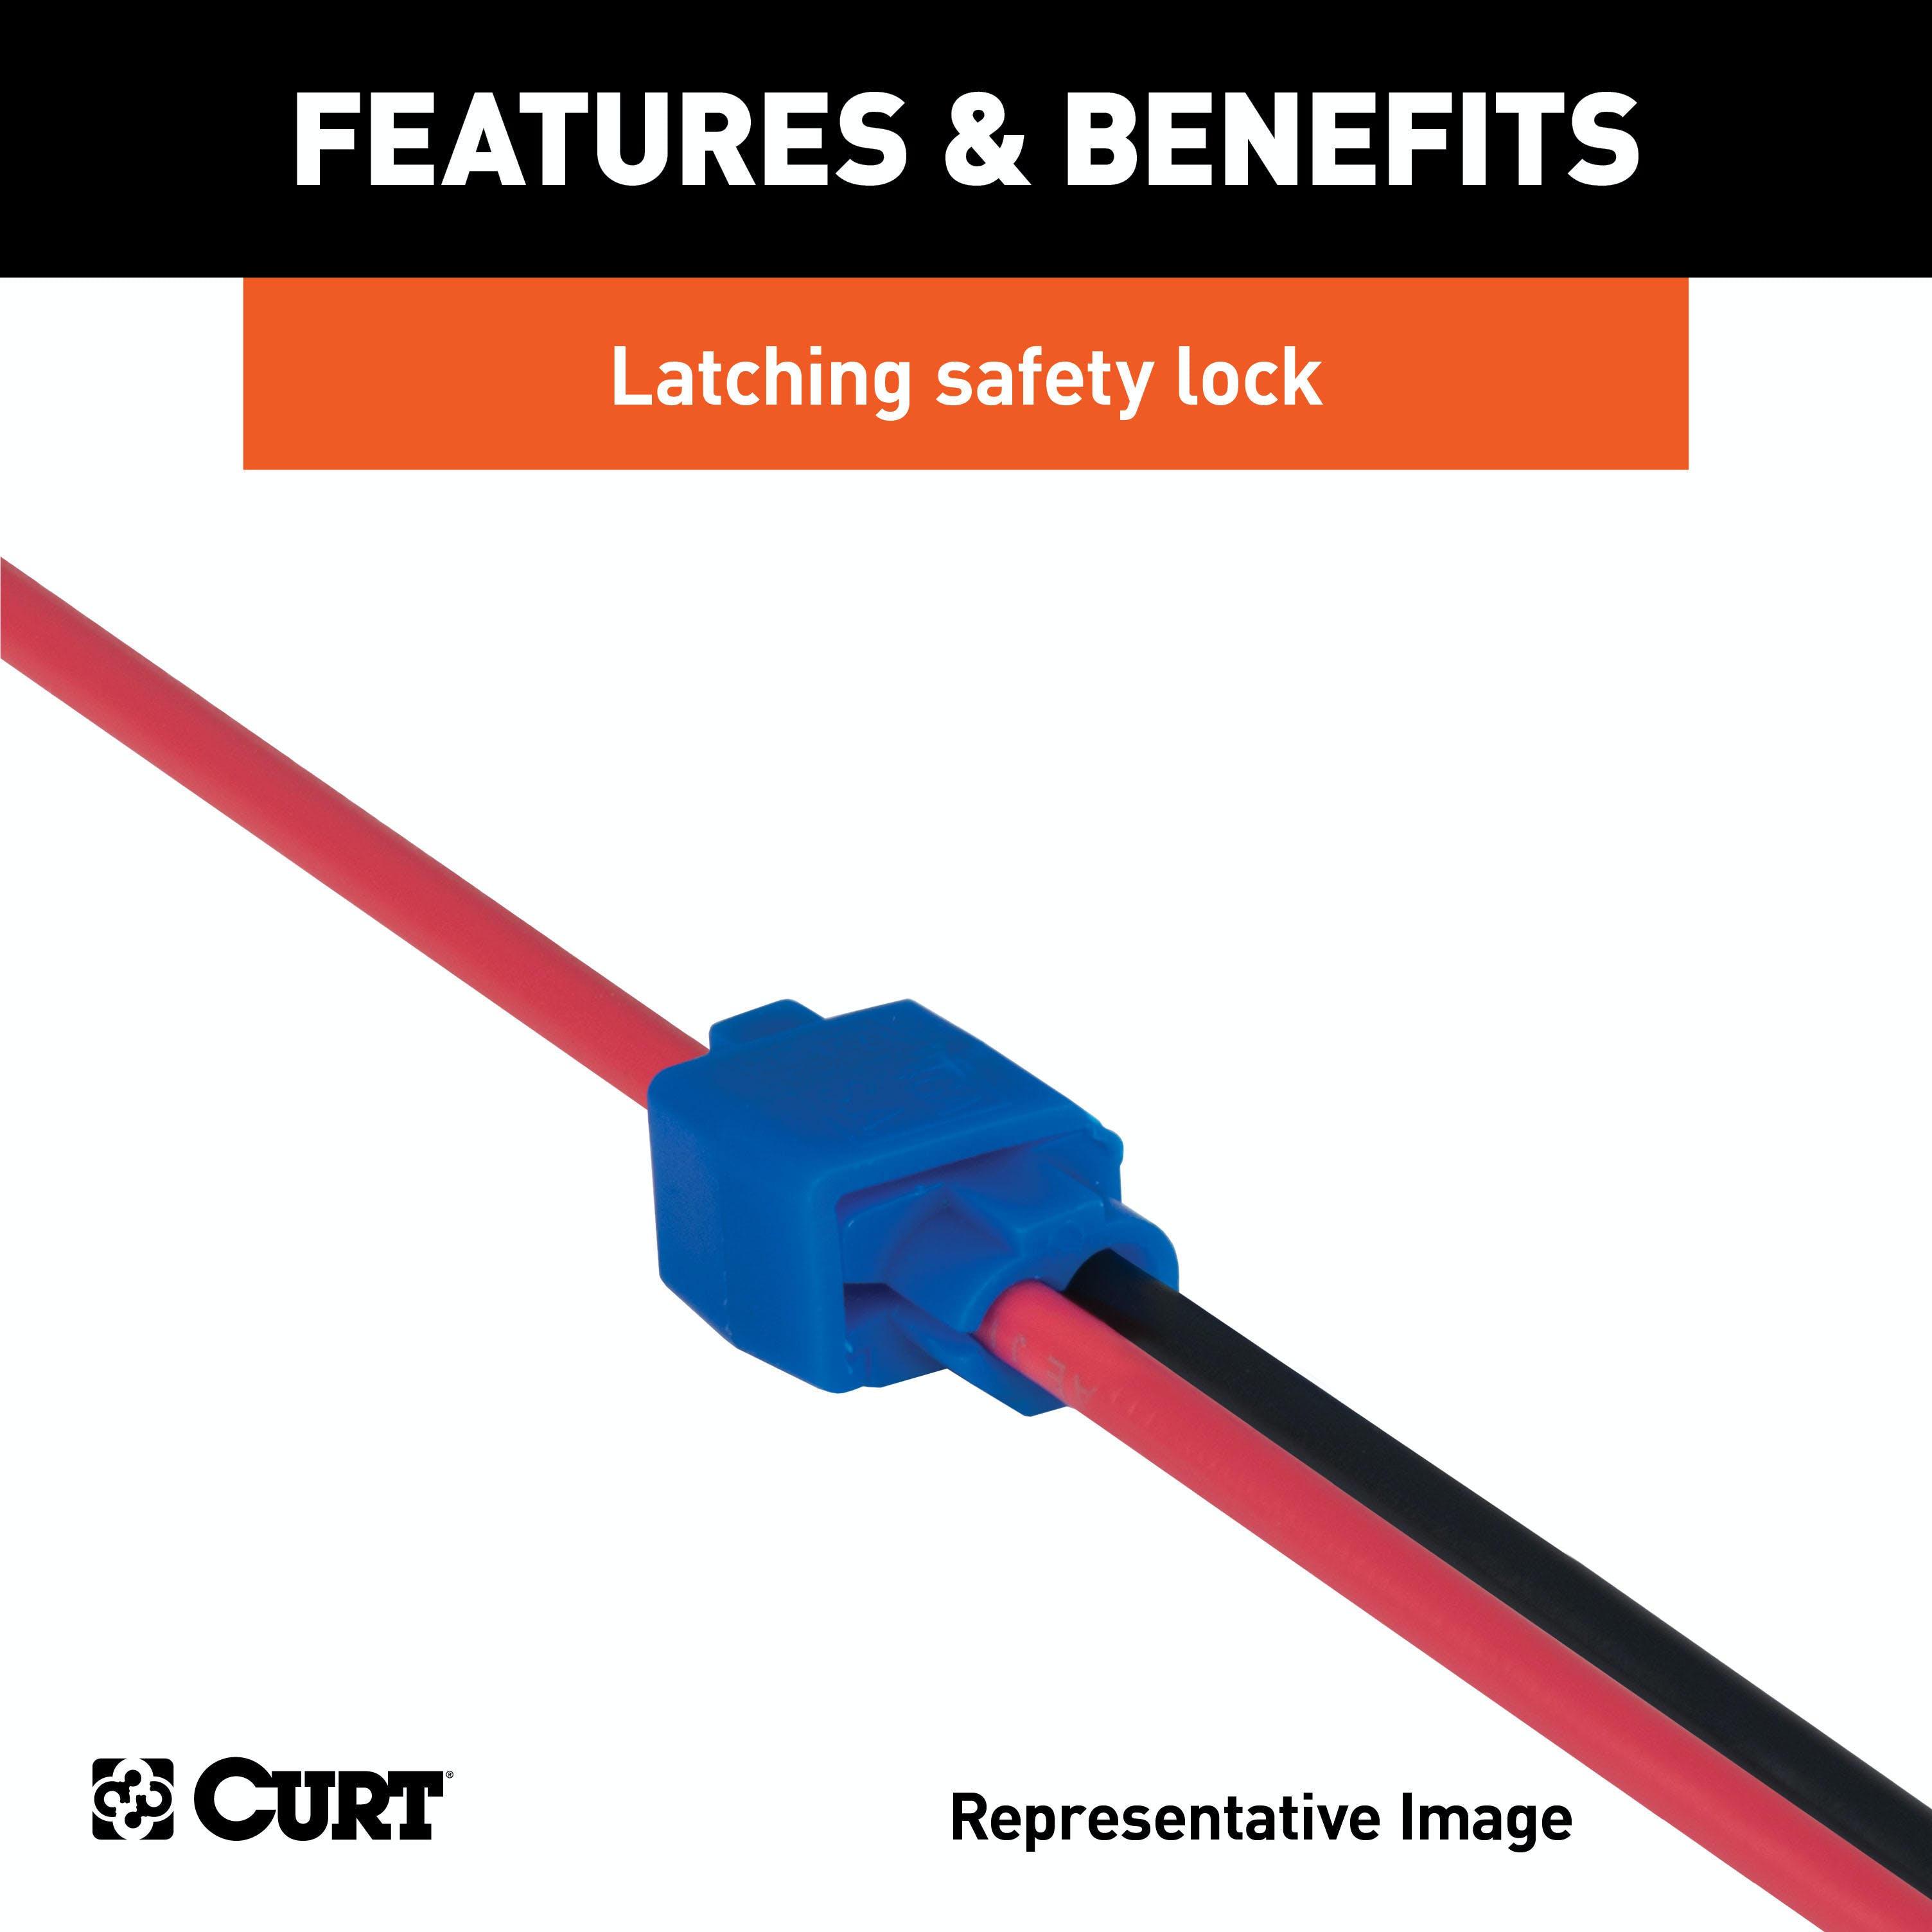 CURT 59905 Snap Lock Tap Connectors (12-10 Wire Gauge, 100-Pack)